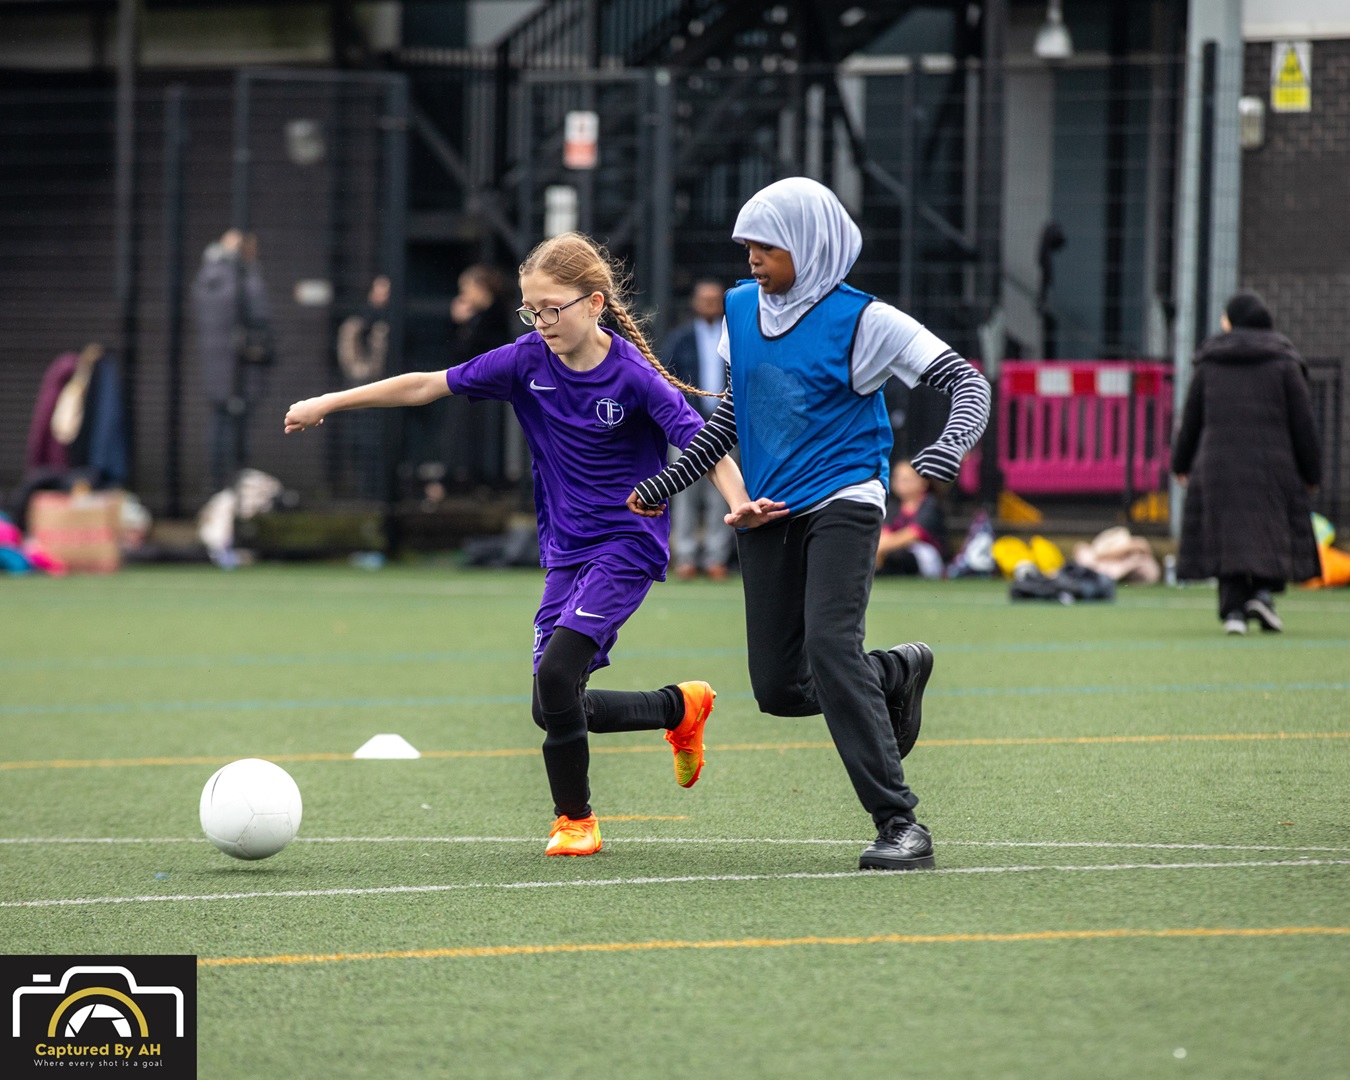 Two girls playing football